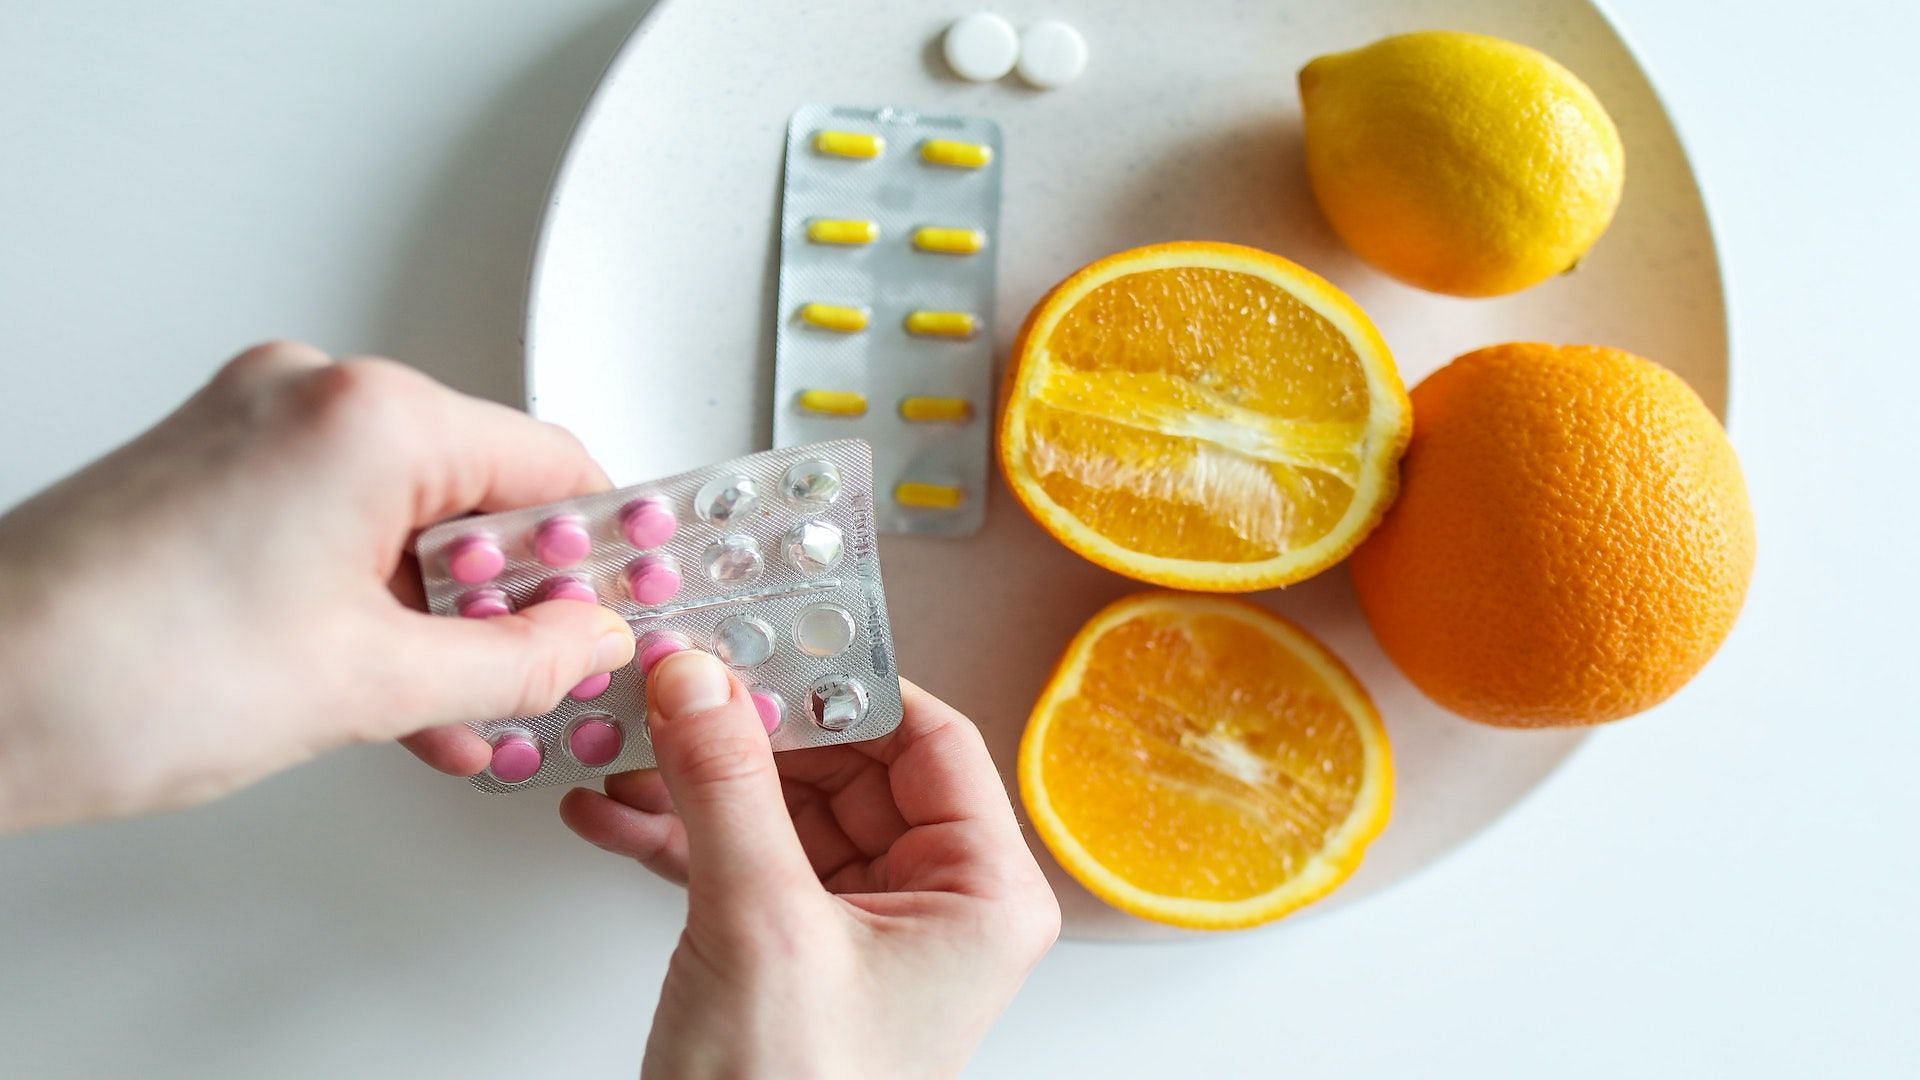 Are B-complex vitamins good for you? Image via Pexels/Polina Tankilevitch